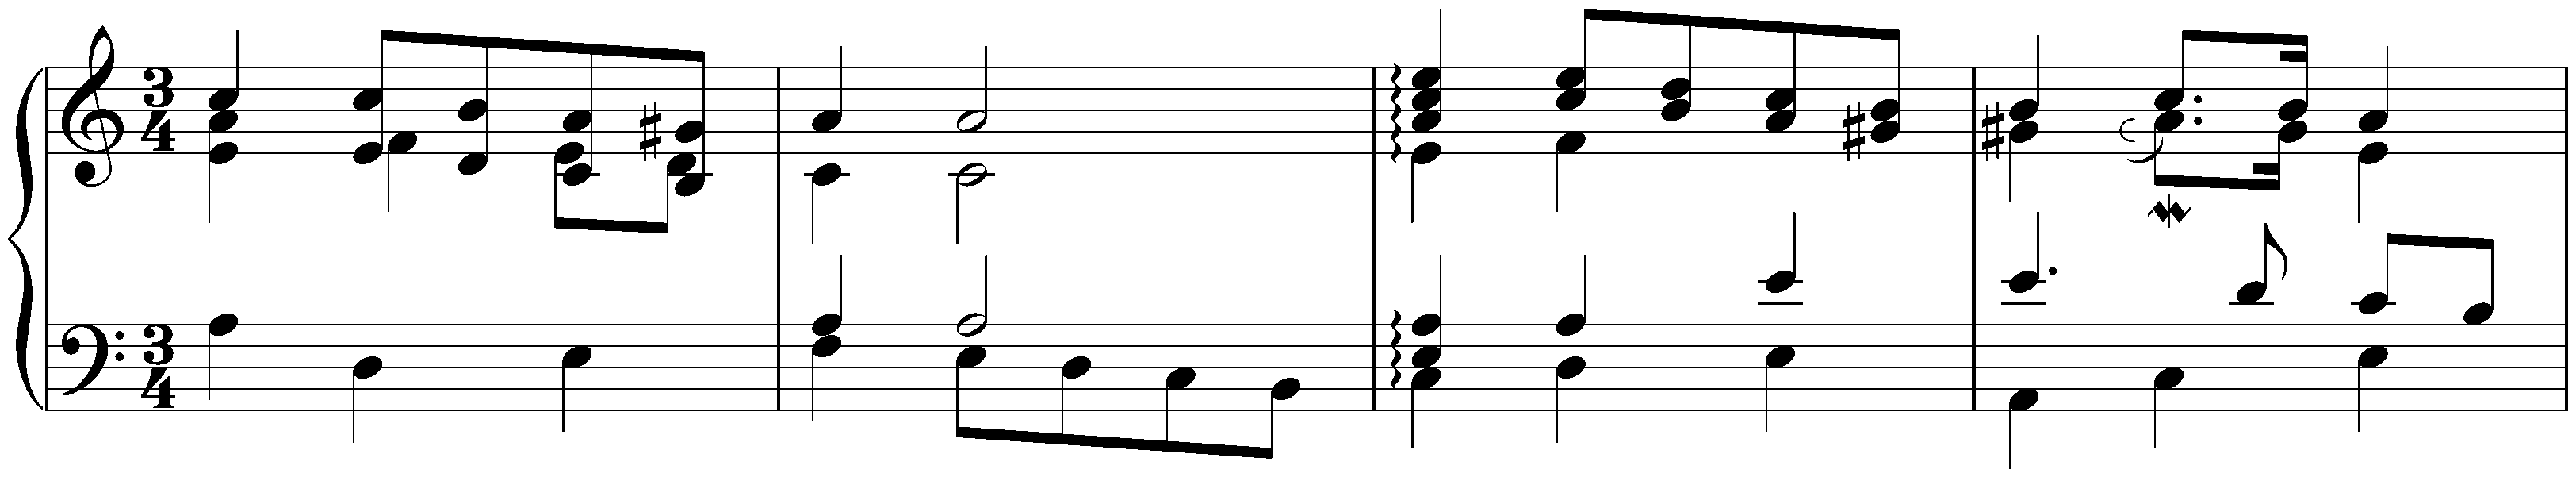 English Suite no. 2 in A minor, BWV 807; 4a. Sarabande